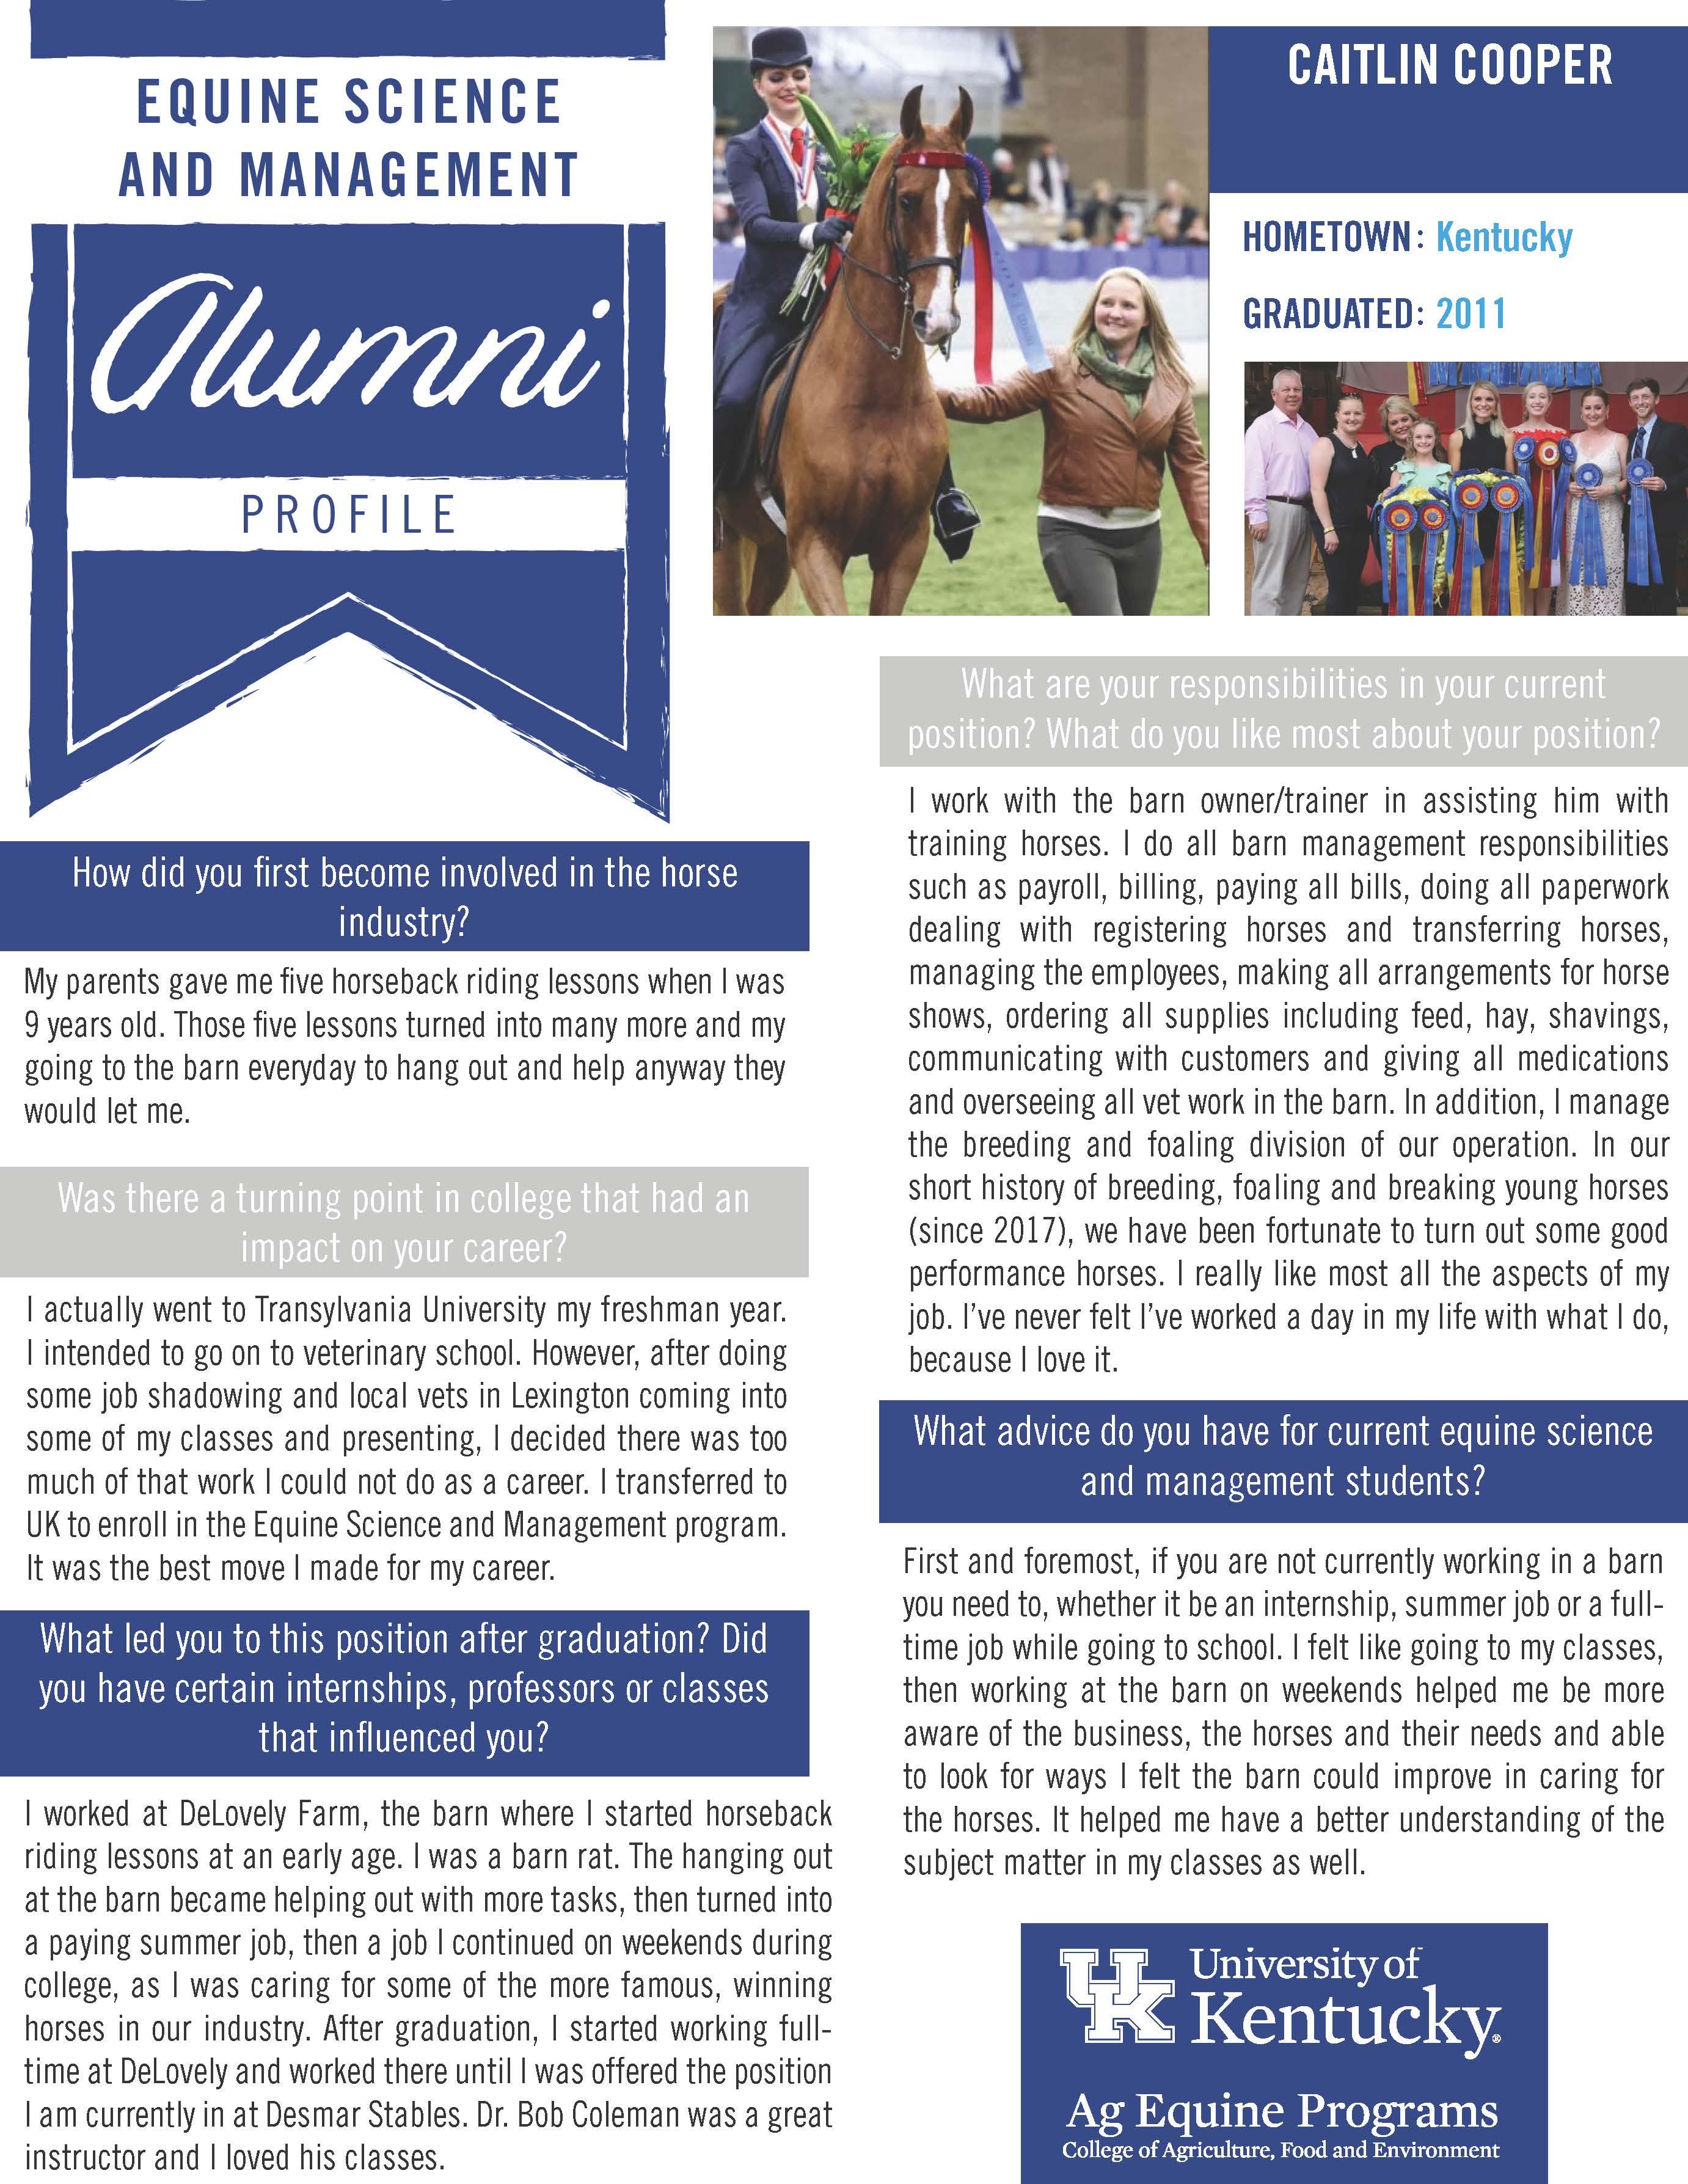 Alumni Profile for Caitlin Cooper (class of 2011)